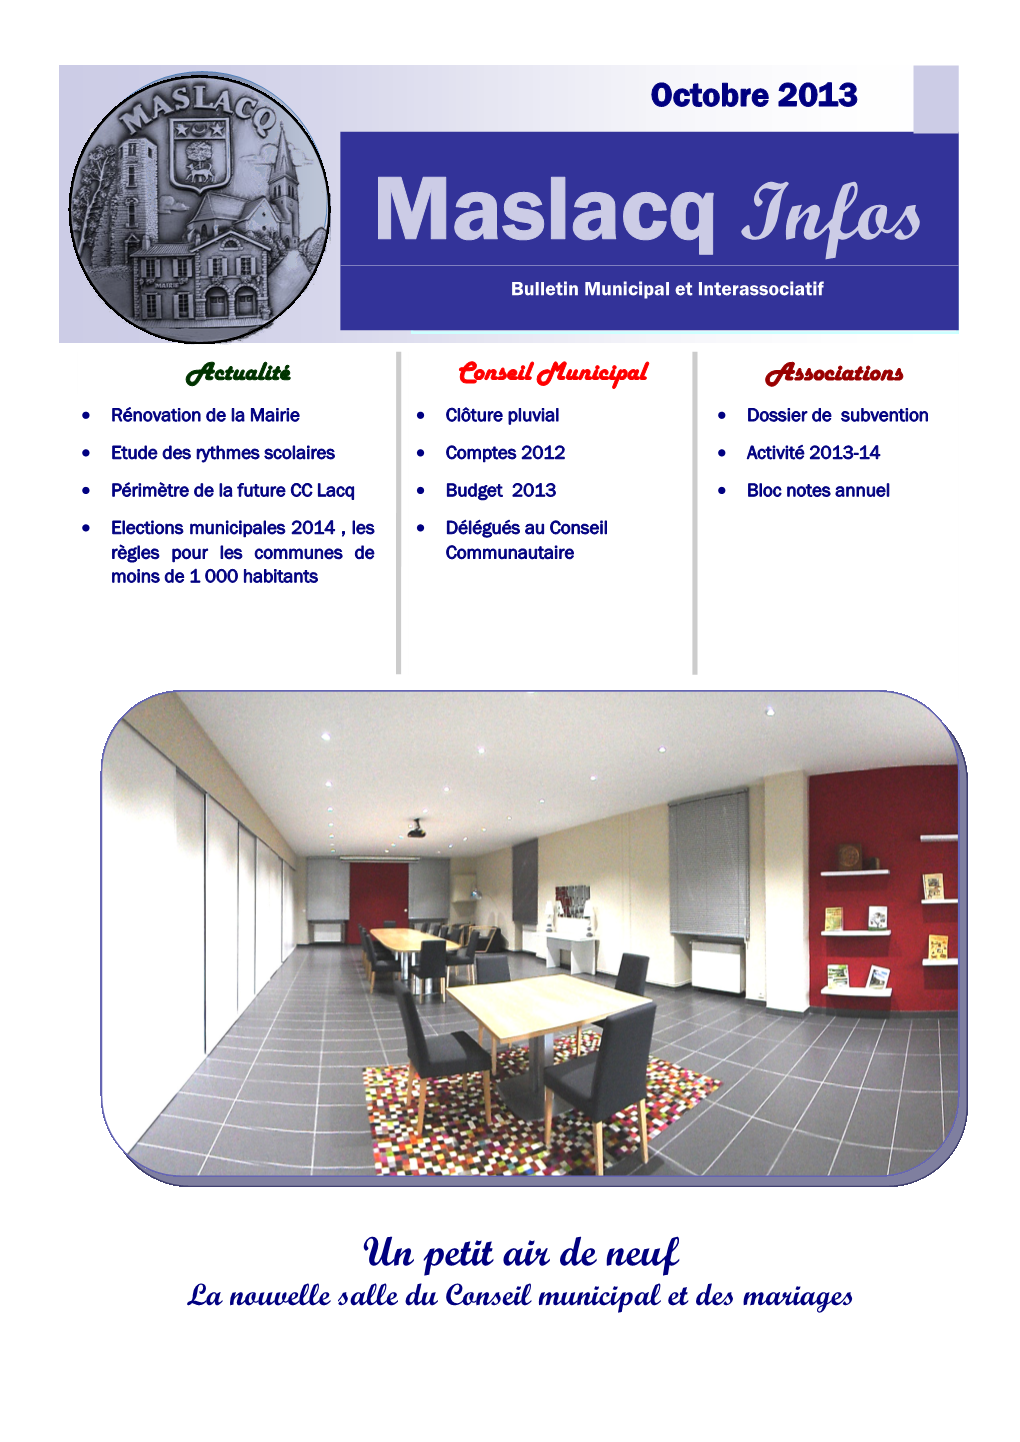 Maslacq Infos Bulletin Municipalbulletin Municipal Et Interassociatif Et Interassociatif